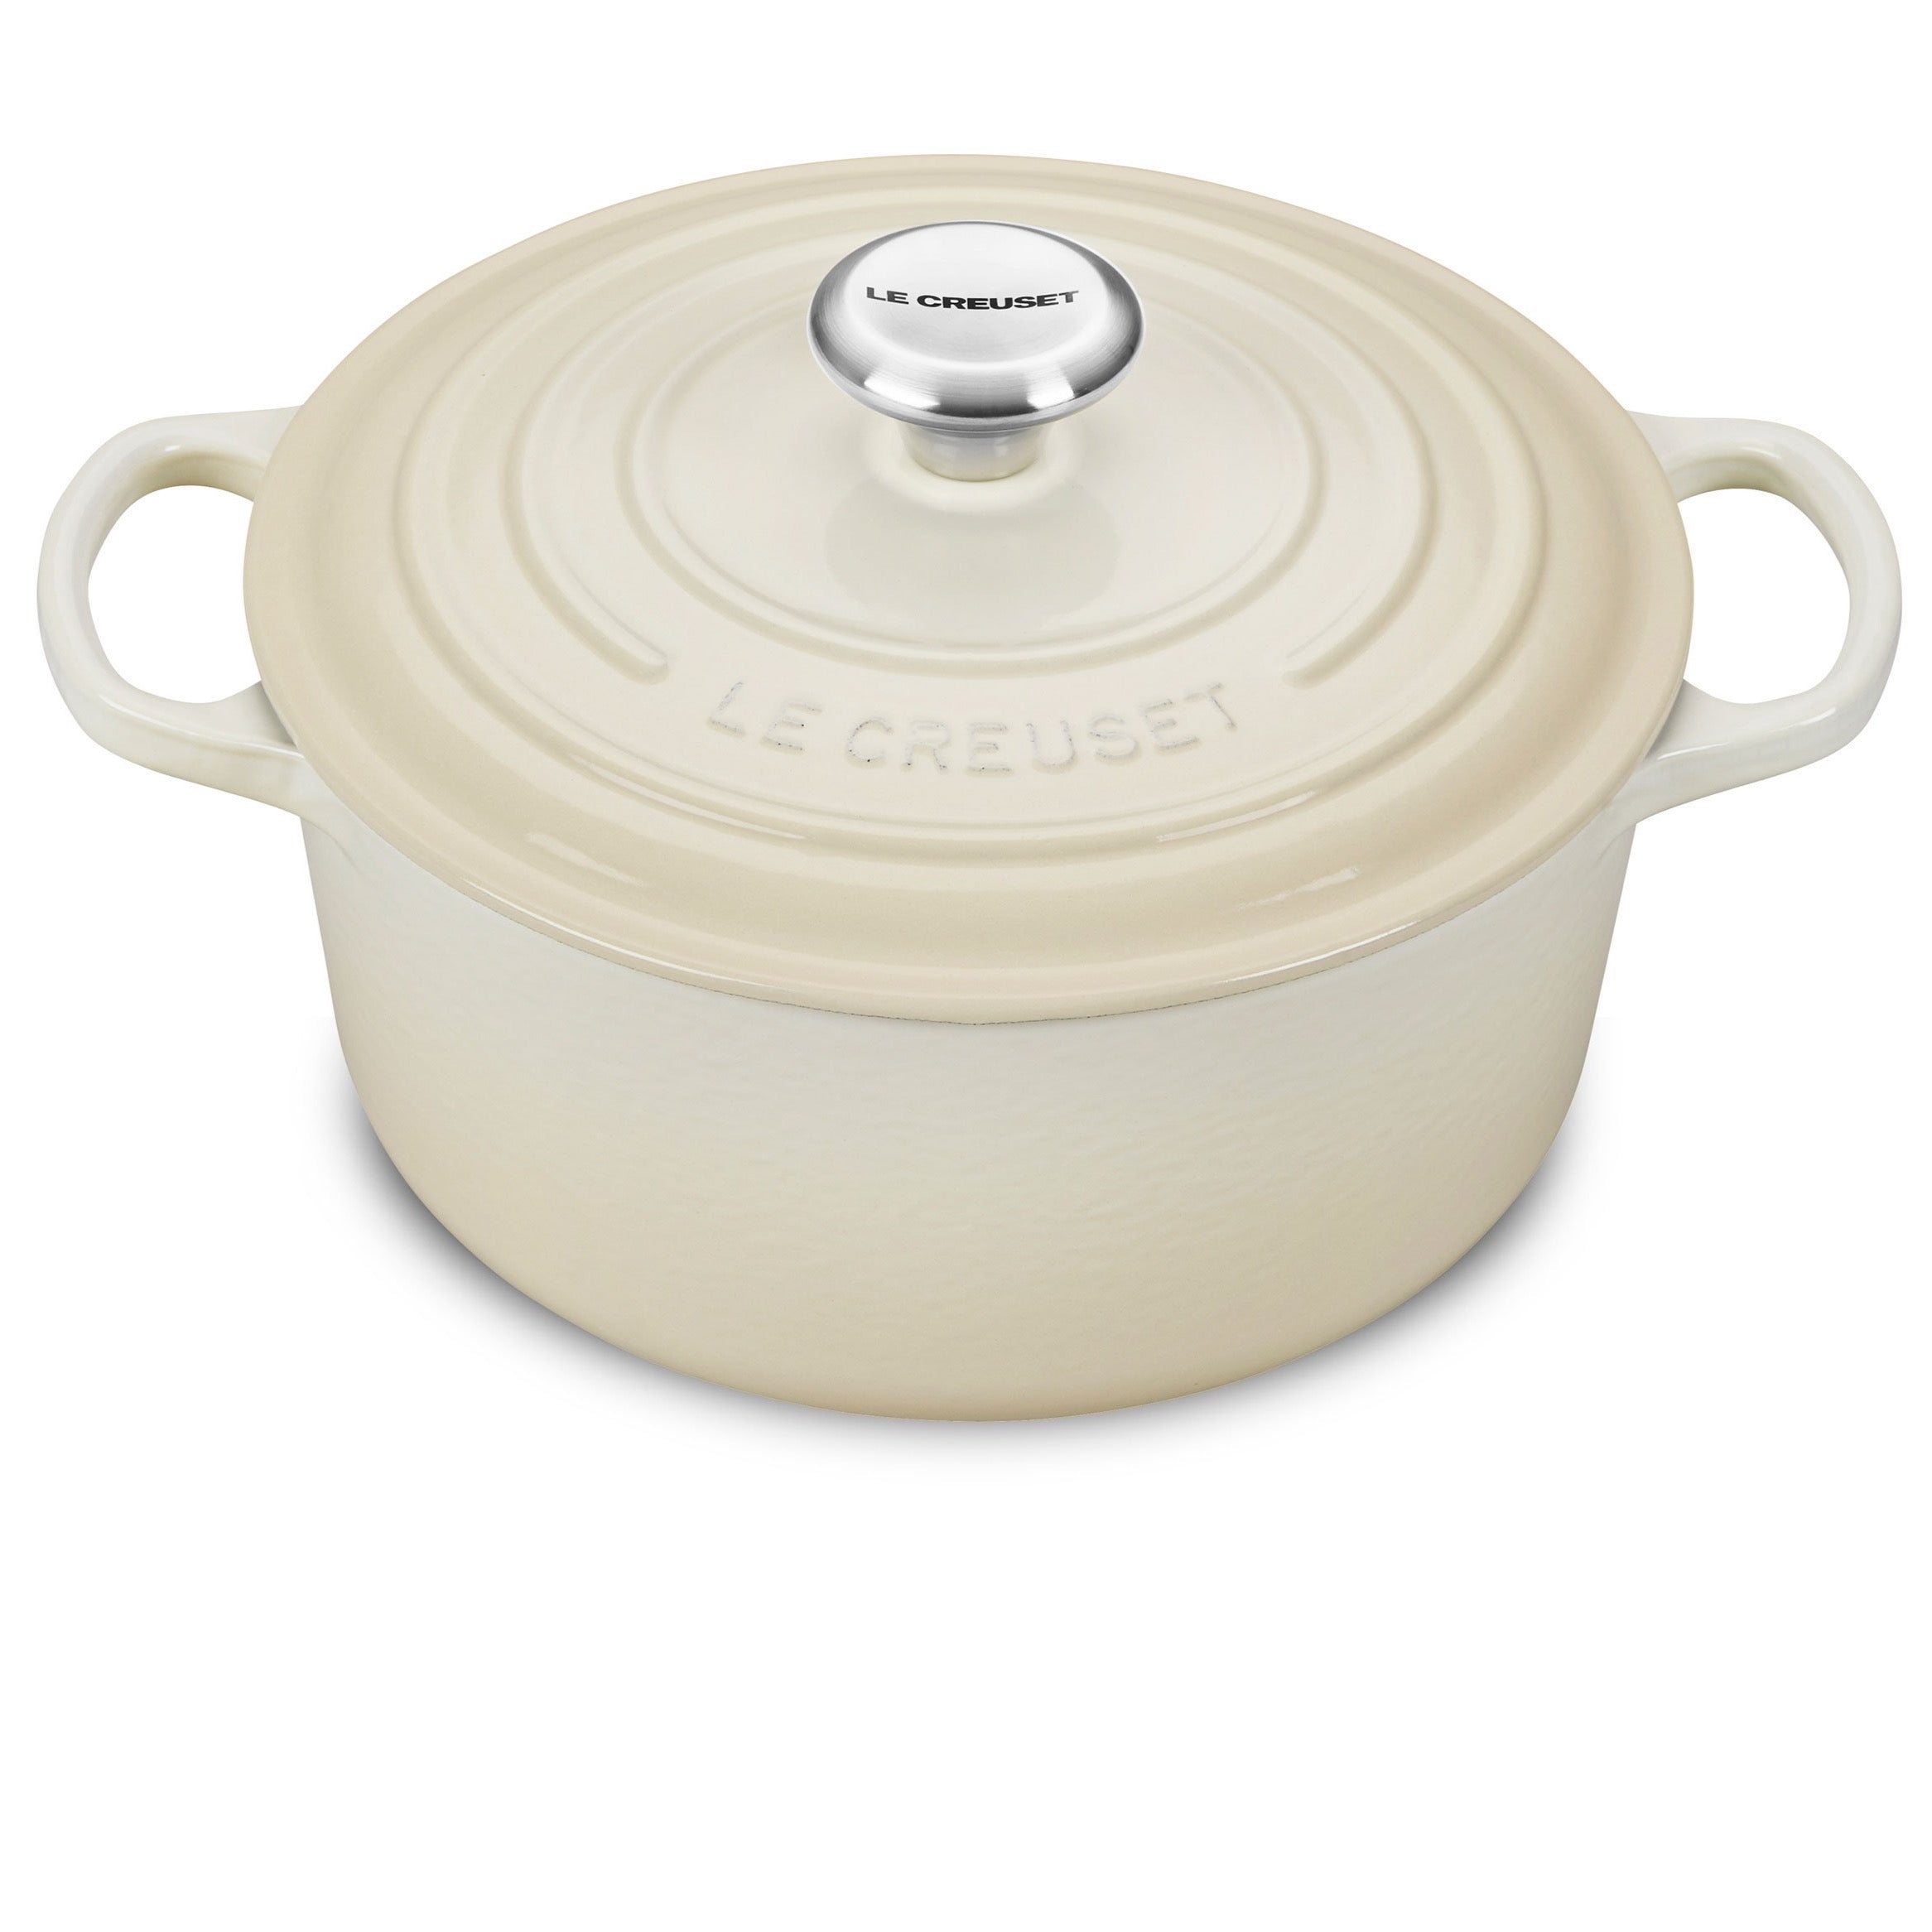 Le Creuset 3.5 Qt. Signature Round Oven - Meringue – The Happy Cook